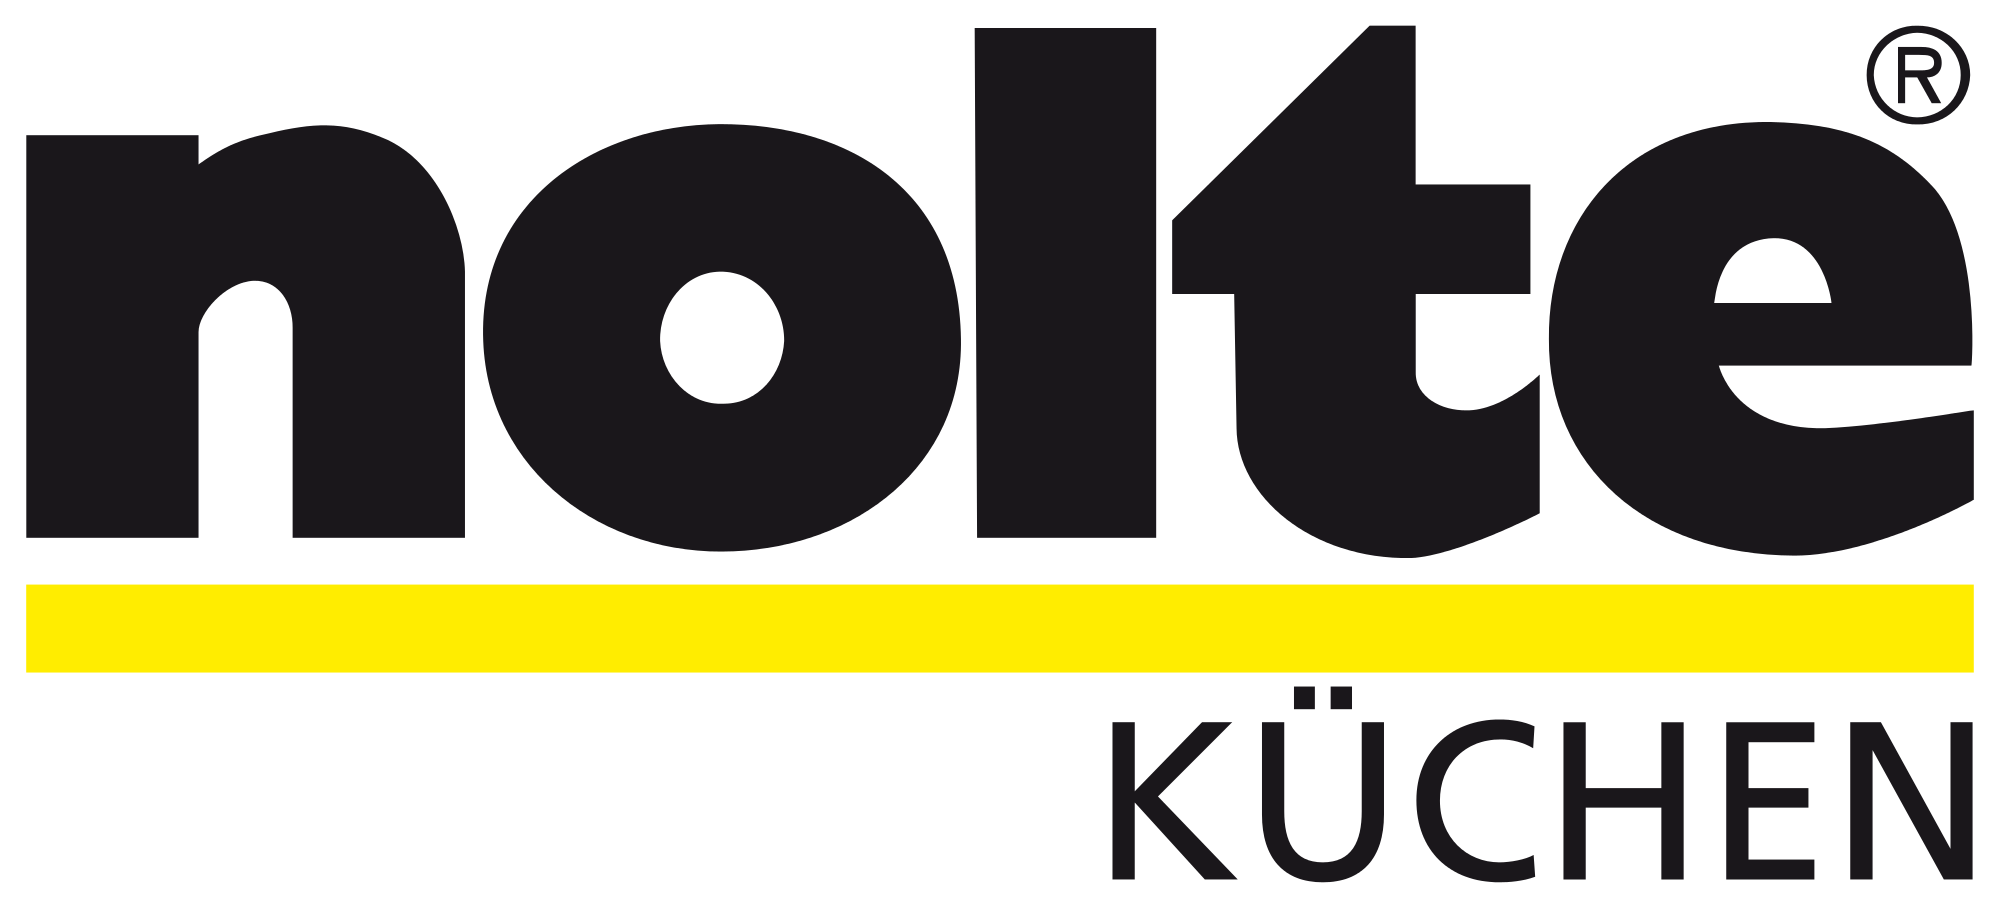 Nolte_Küchen_logo